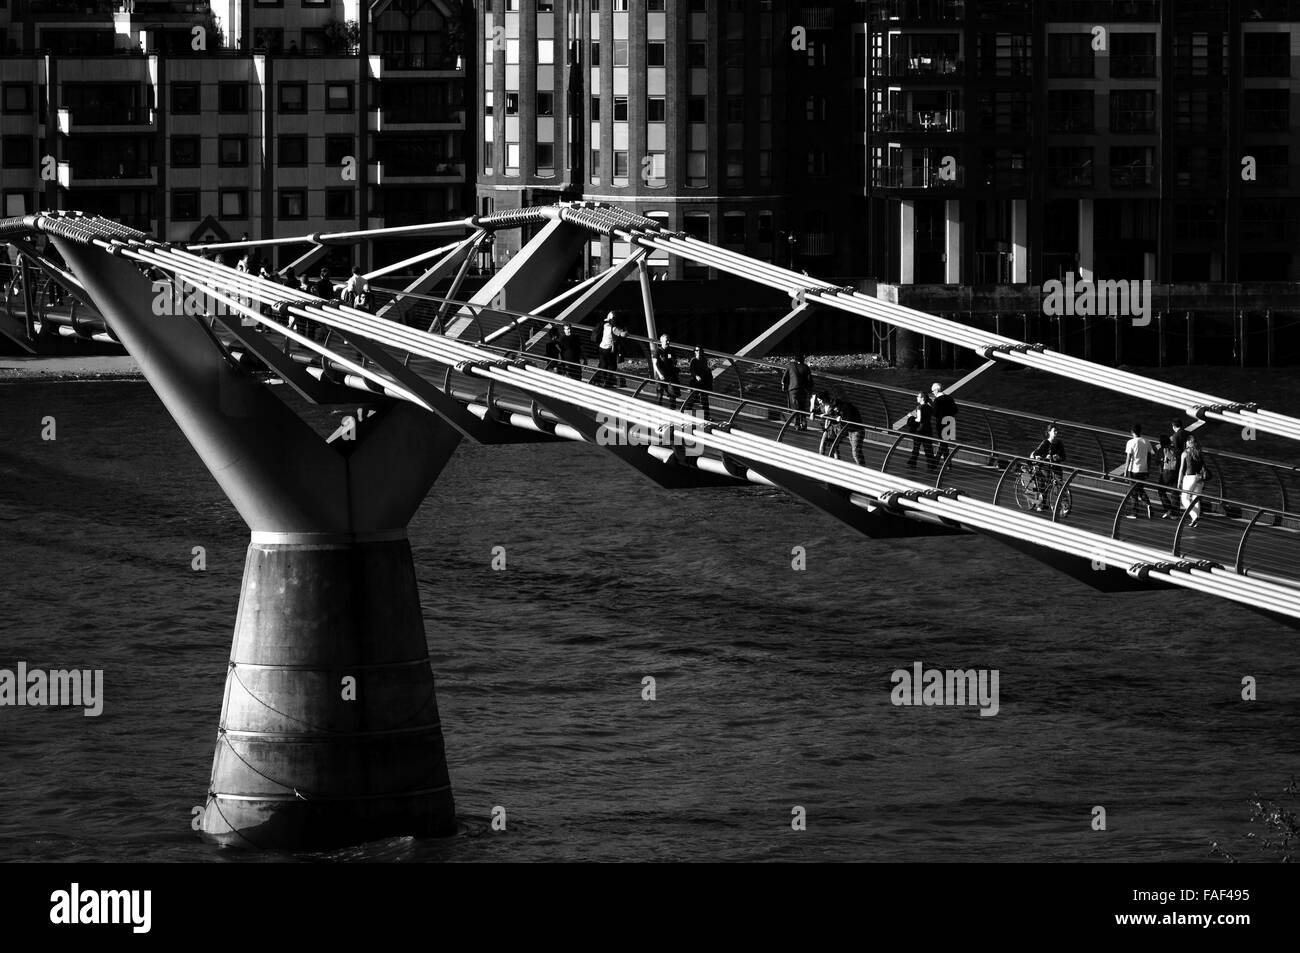 London Millennium Footbridge in London, UK. Black and white photography. Stock Photo